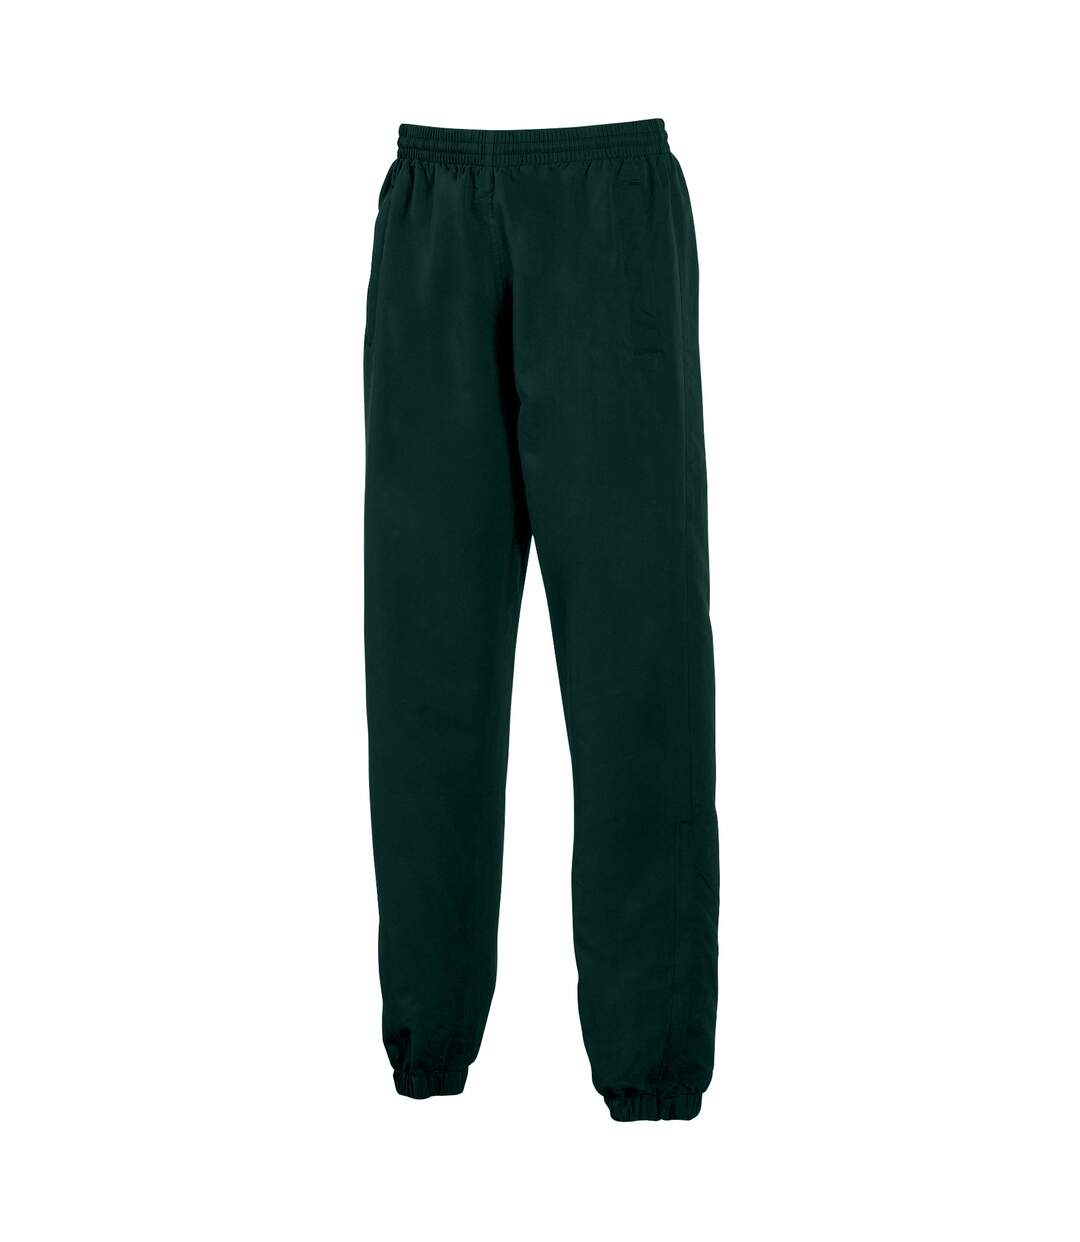 Tombo Teamsport Mens Sports Lined Tracksuit Bottoms / Jog Pants (Dark Green)